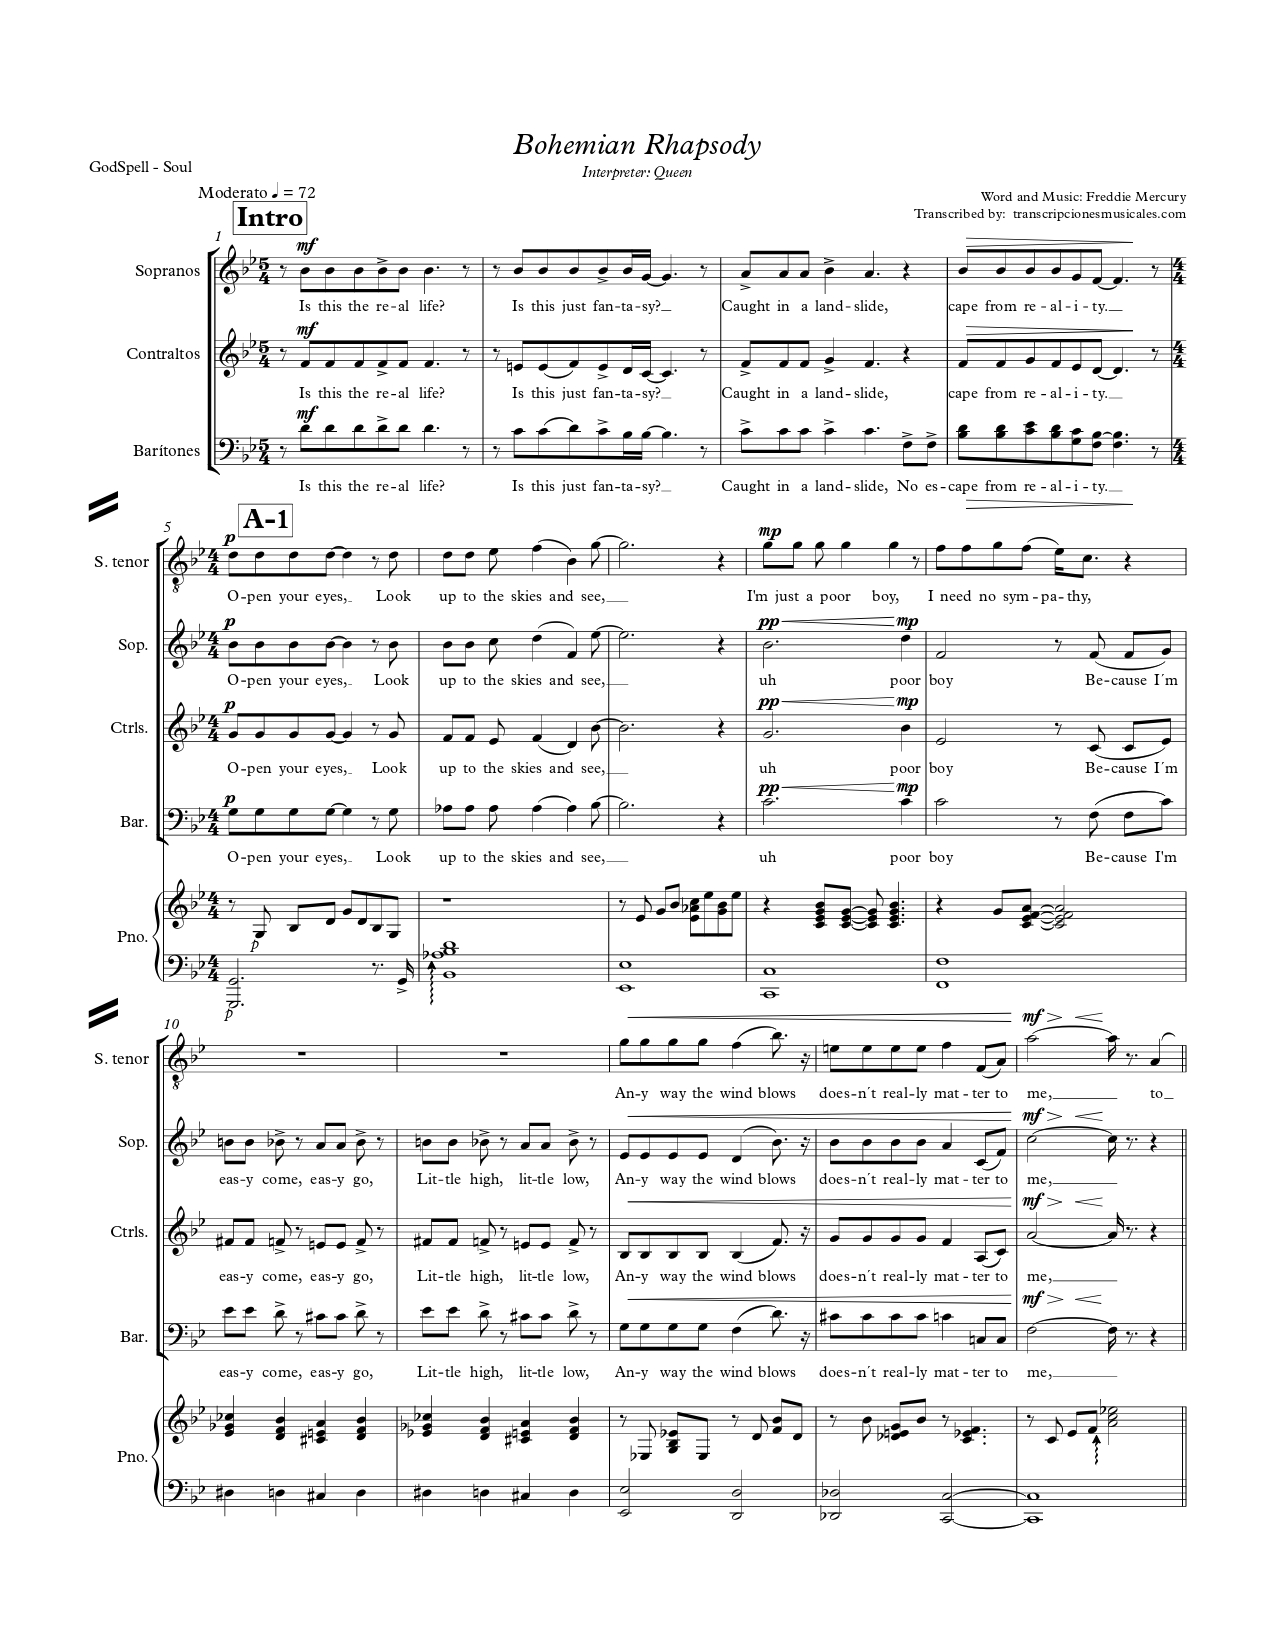 Bohemian Rhapsody - sheet music page 1